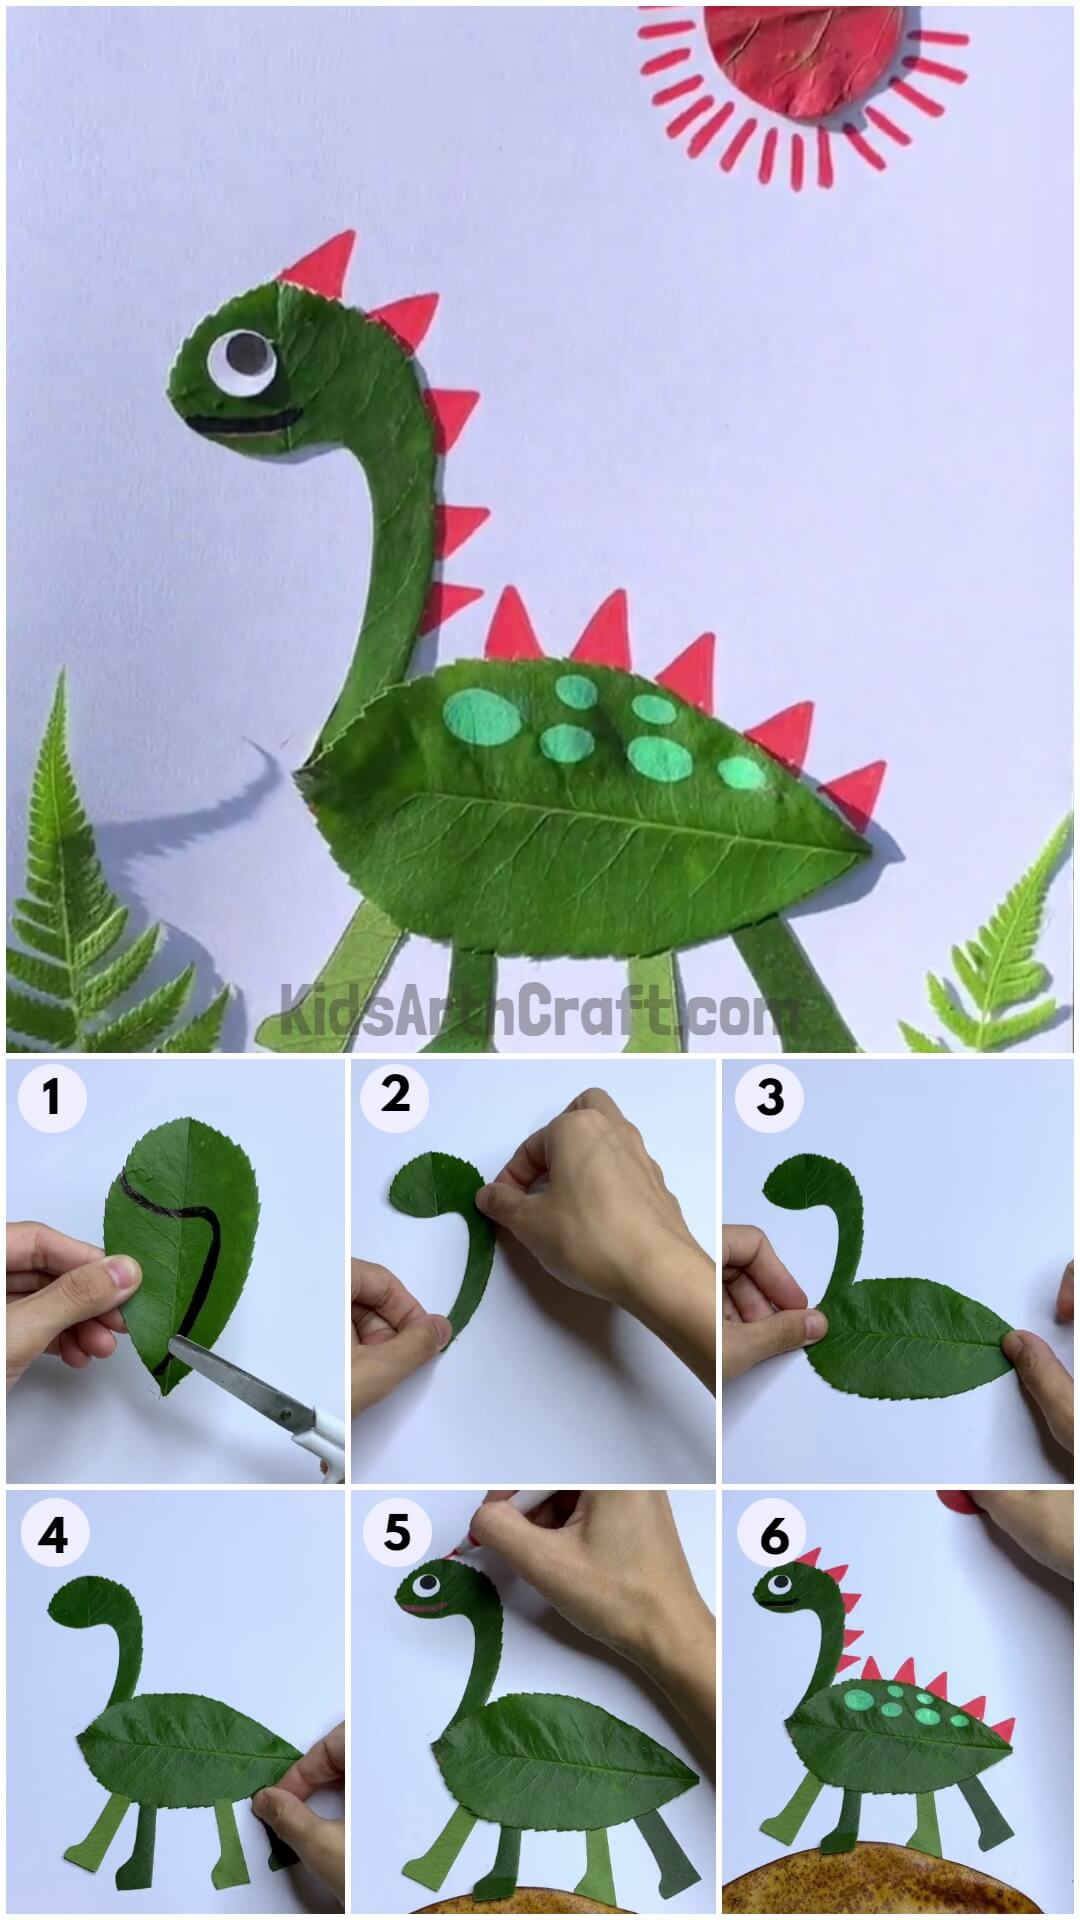 DIY leaf art dinosaur Step by Step tutorial for kids